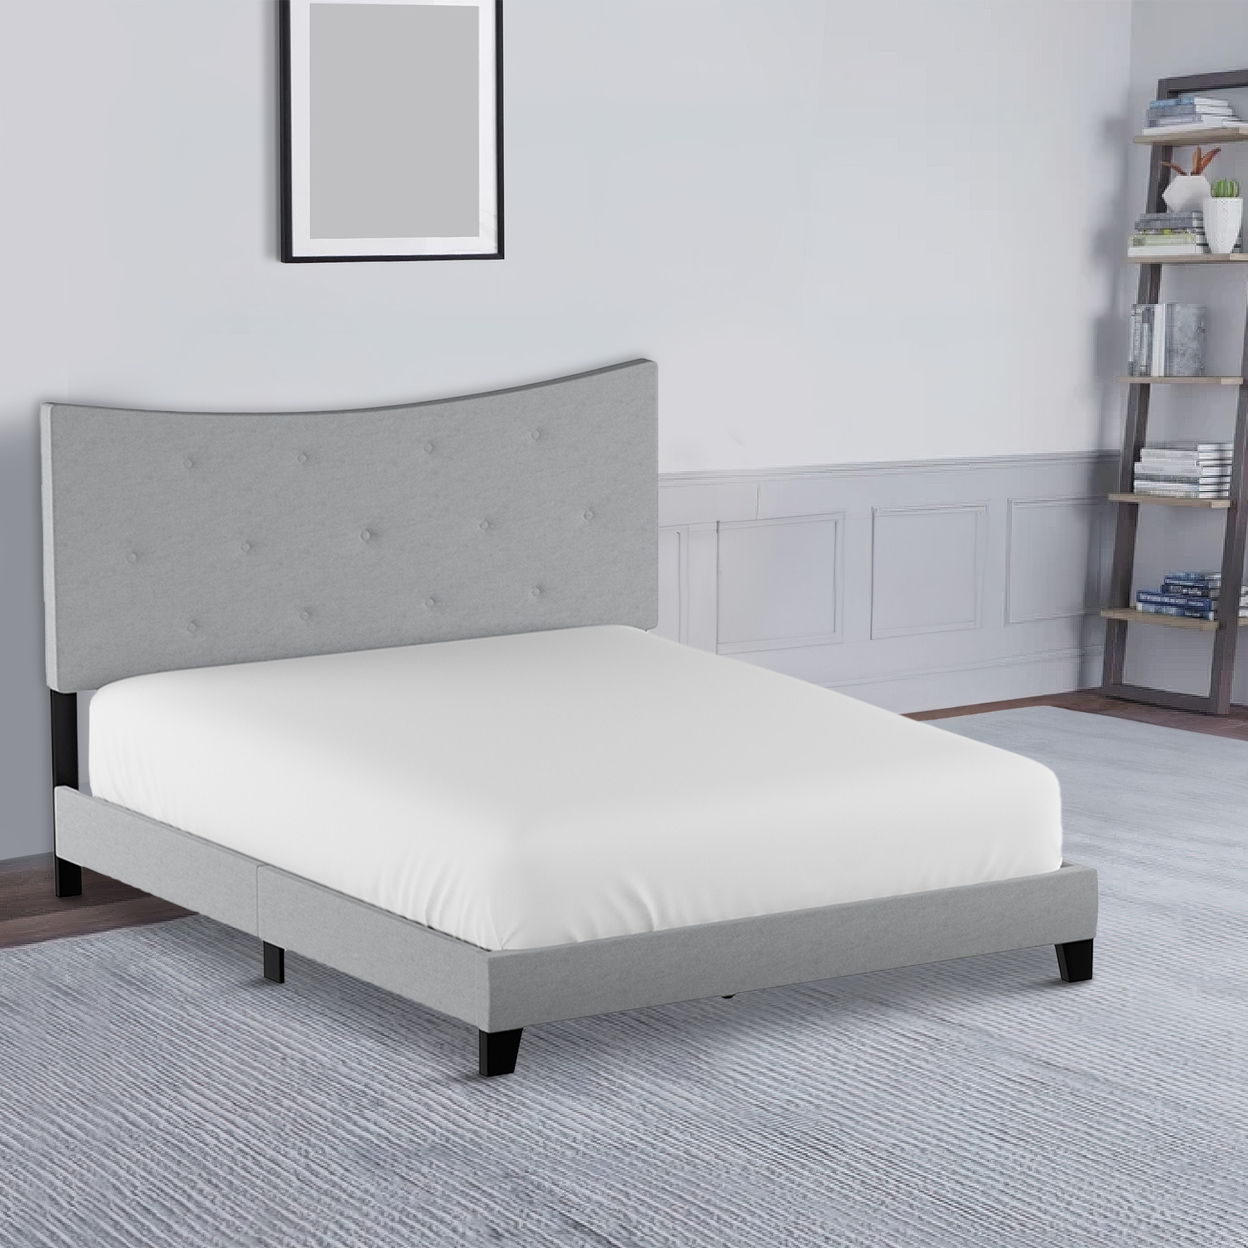 ACME Venacha Upholstered Platform Queen Bed, Gray Fabric - image 5 of 6